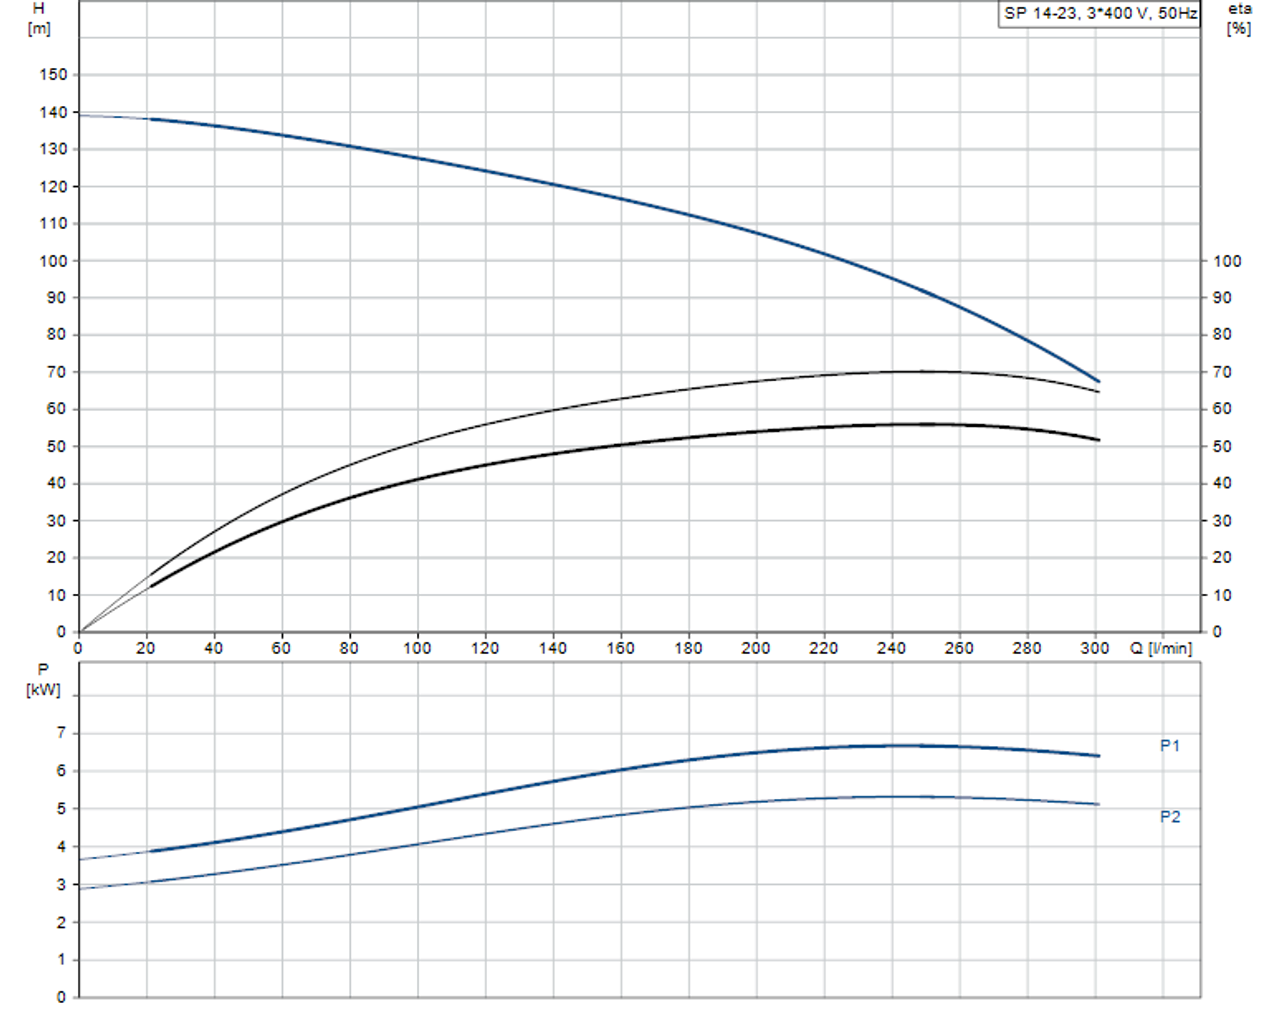 SP 14-23 415v Performance Curve